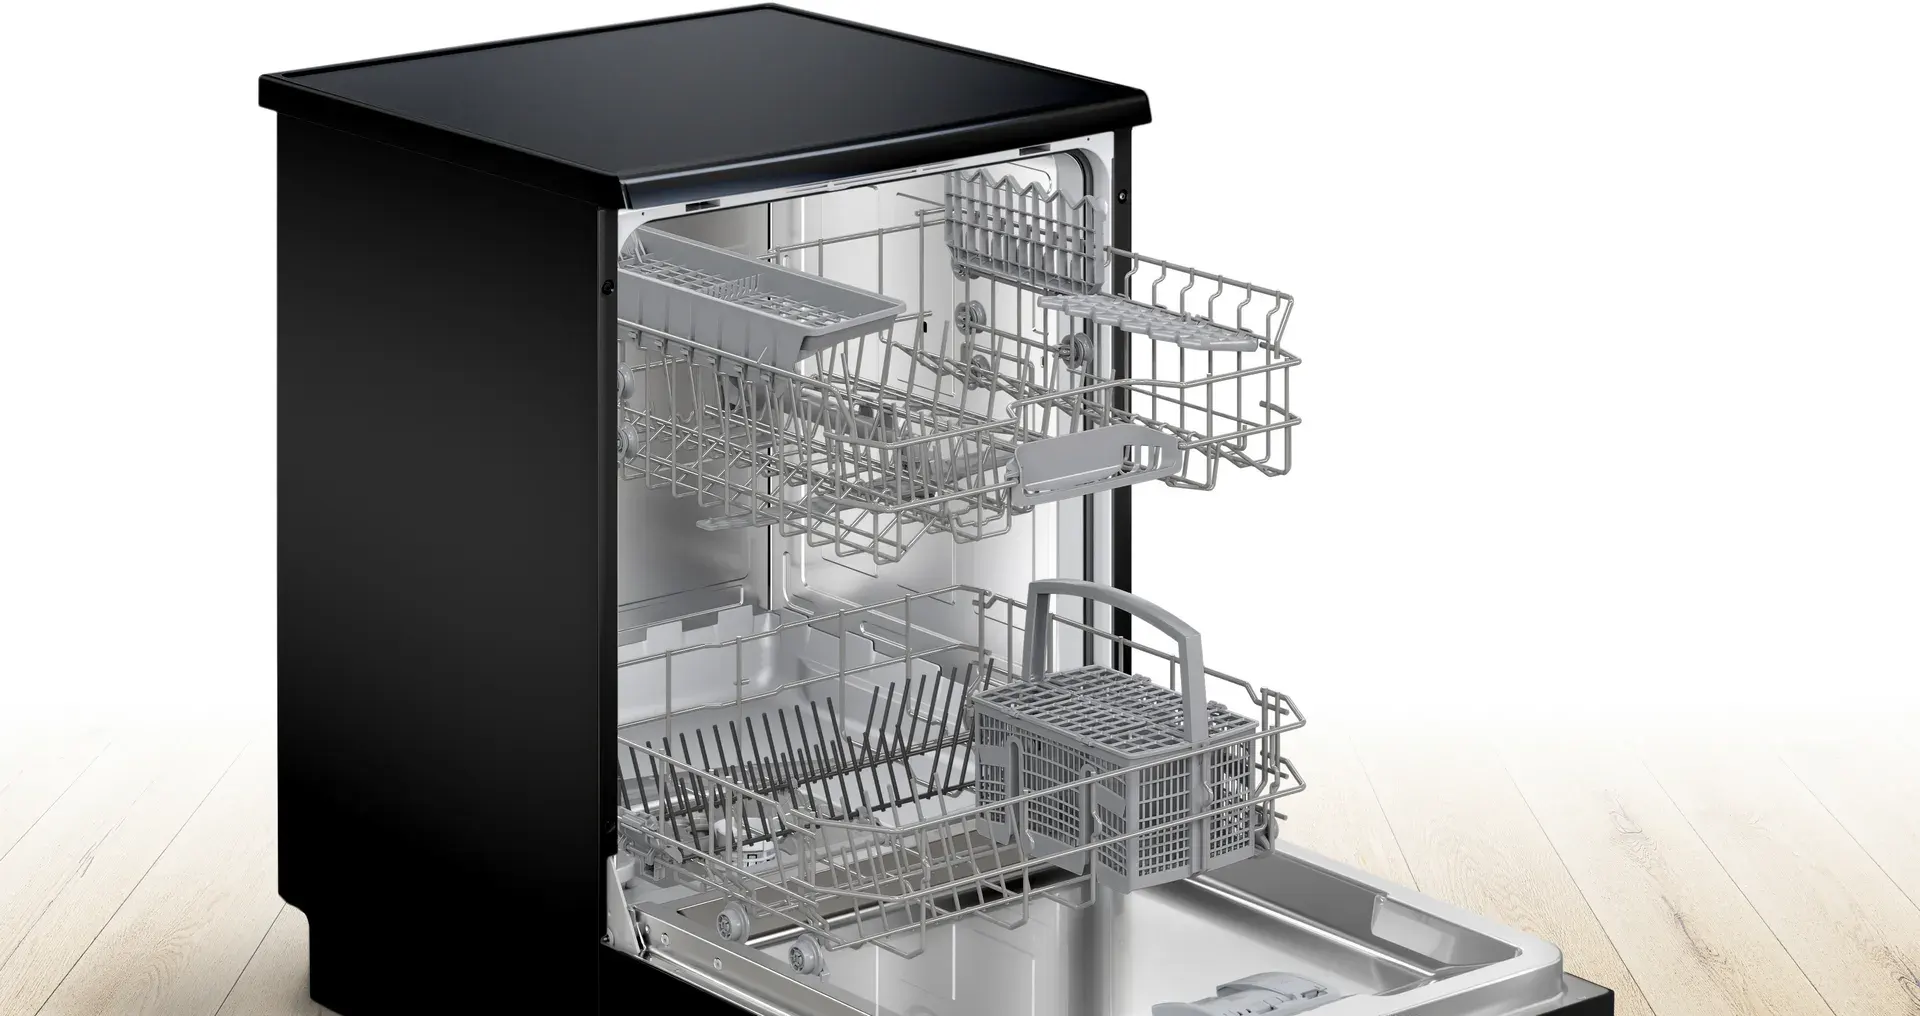 Bosch Serie 2 dishwasher, 12 persons, 60 cm, 5 programs, digital, black, SMS25AB00V